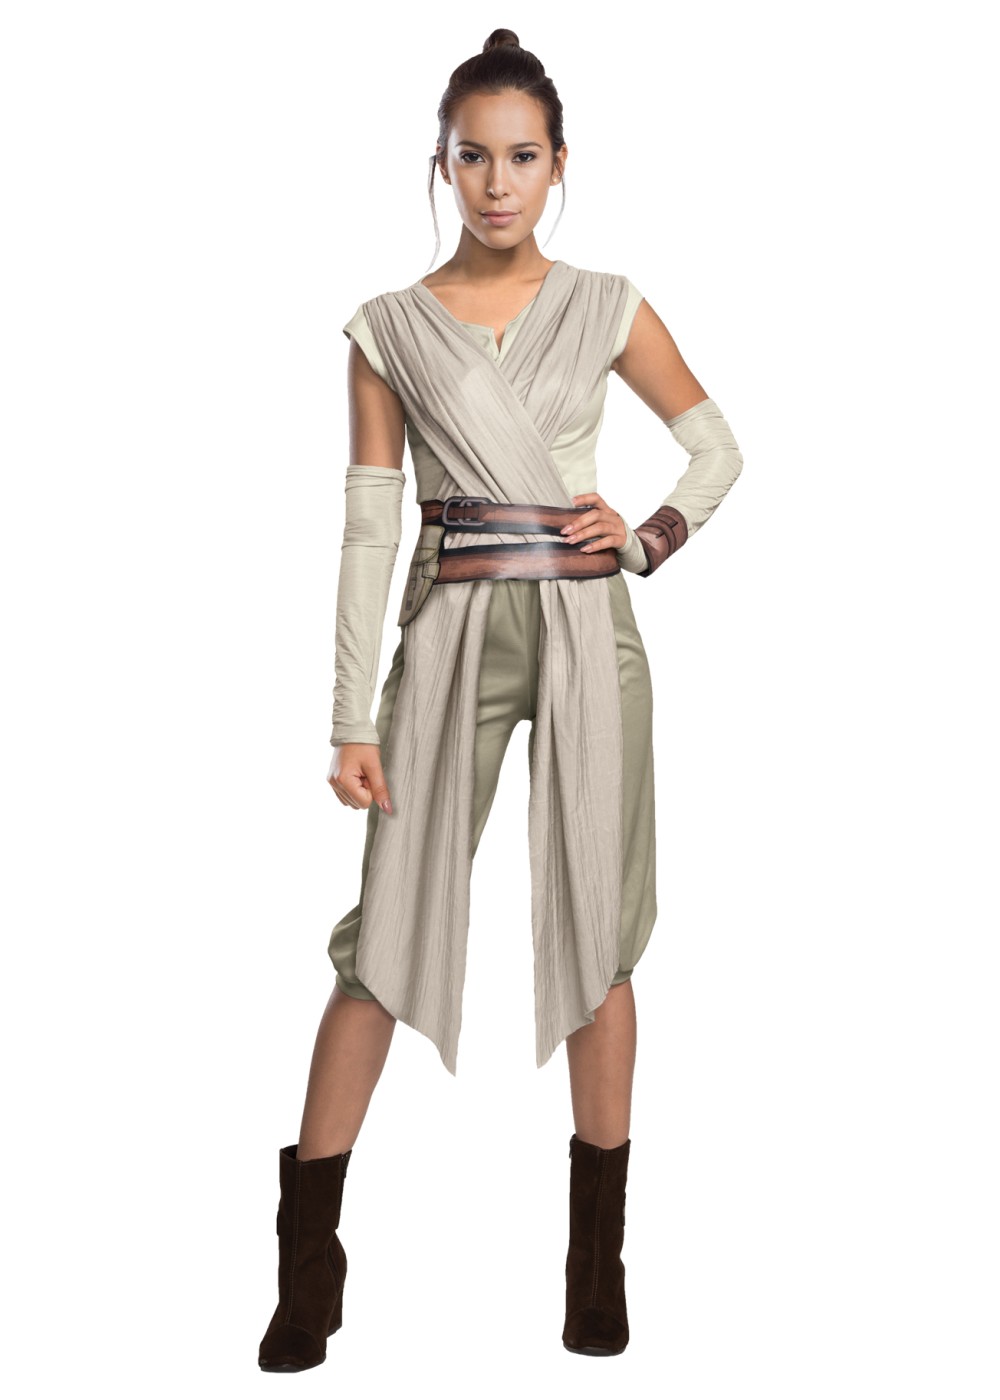 Star Wars Movie Rey Woman Costume